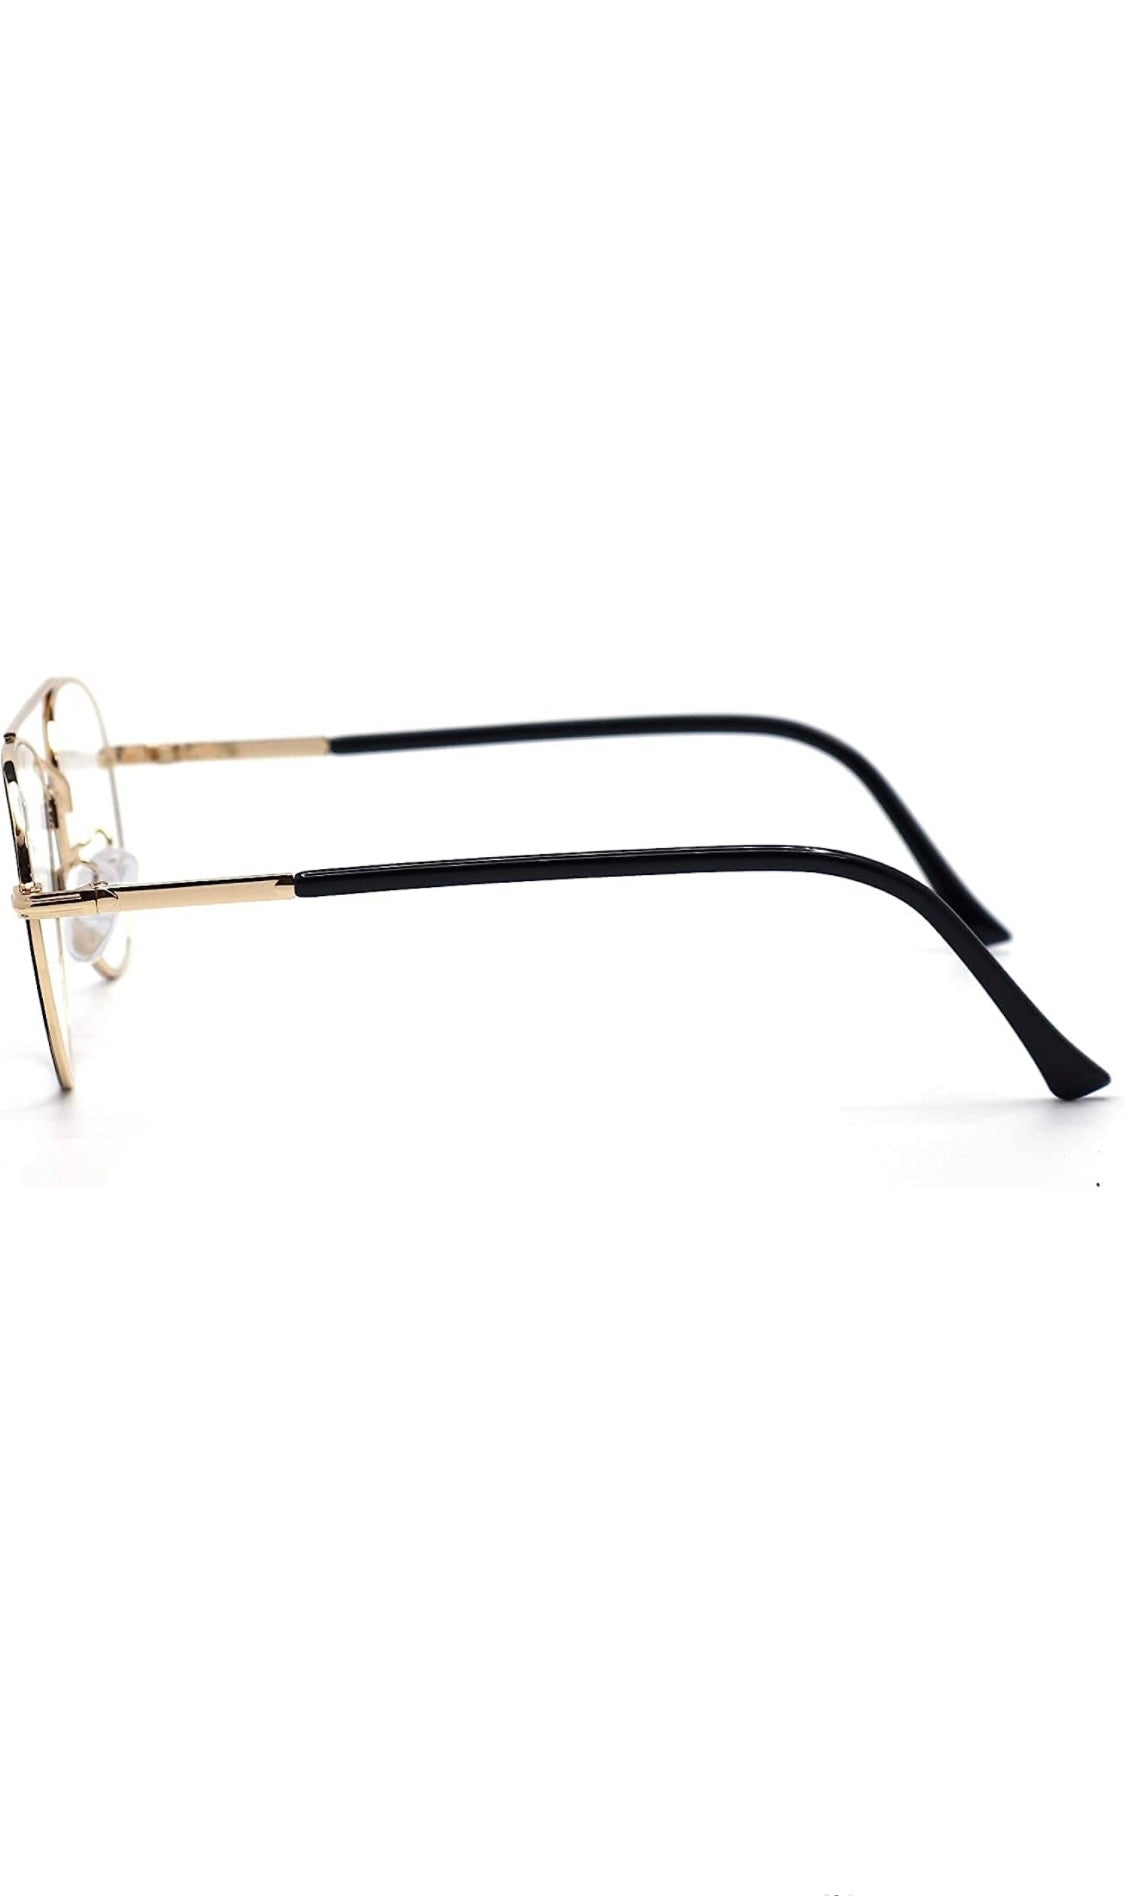 Jodykoes® Unisex Aviator Blu Cut Blue ray Protection Anti Glare Zero Power Computer Protection Eyeglasses For Men and Women Spectacle Frame (Black & Gold) - Jodykoes ®